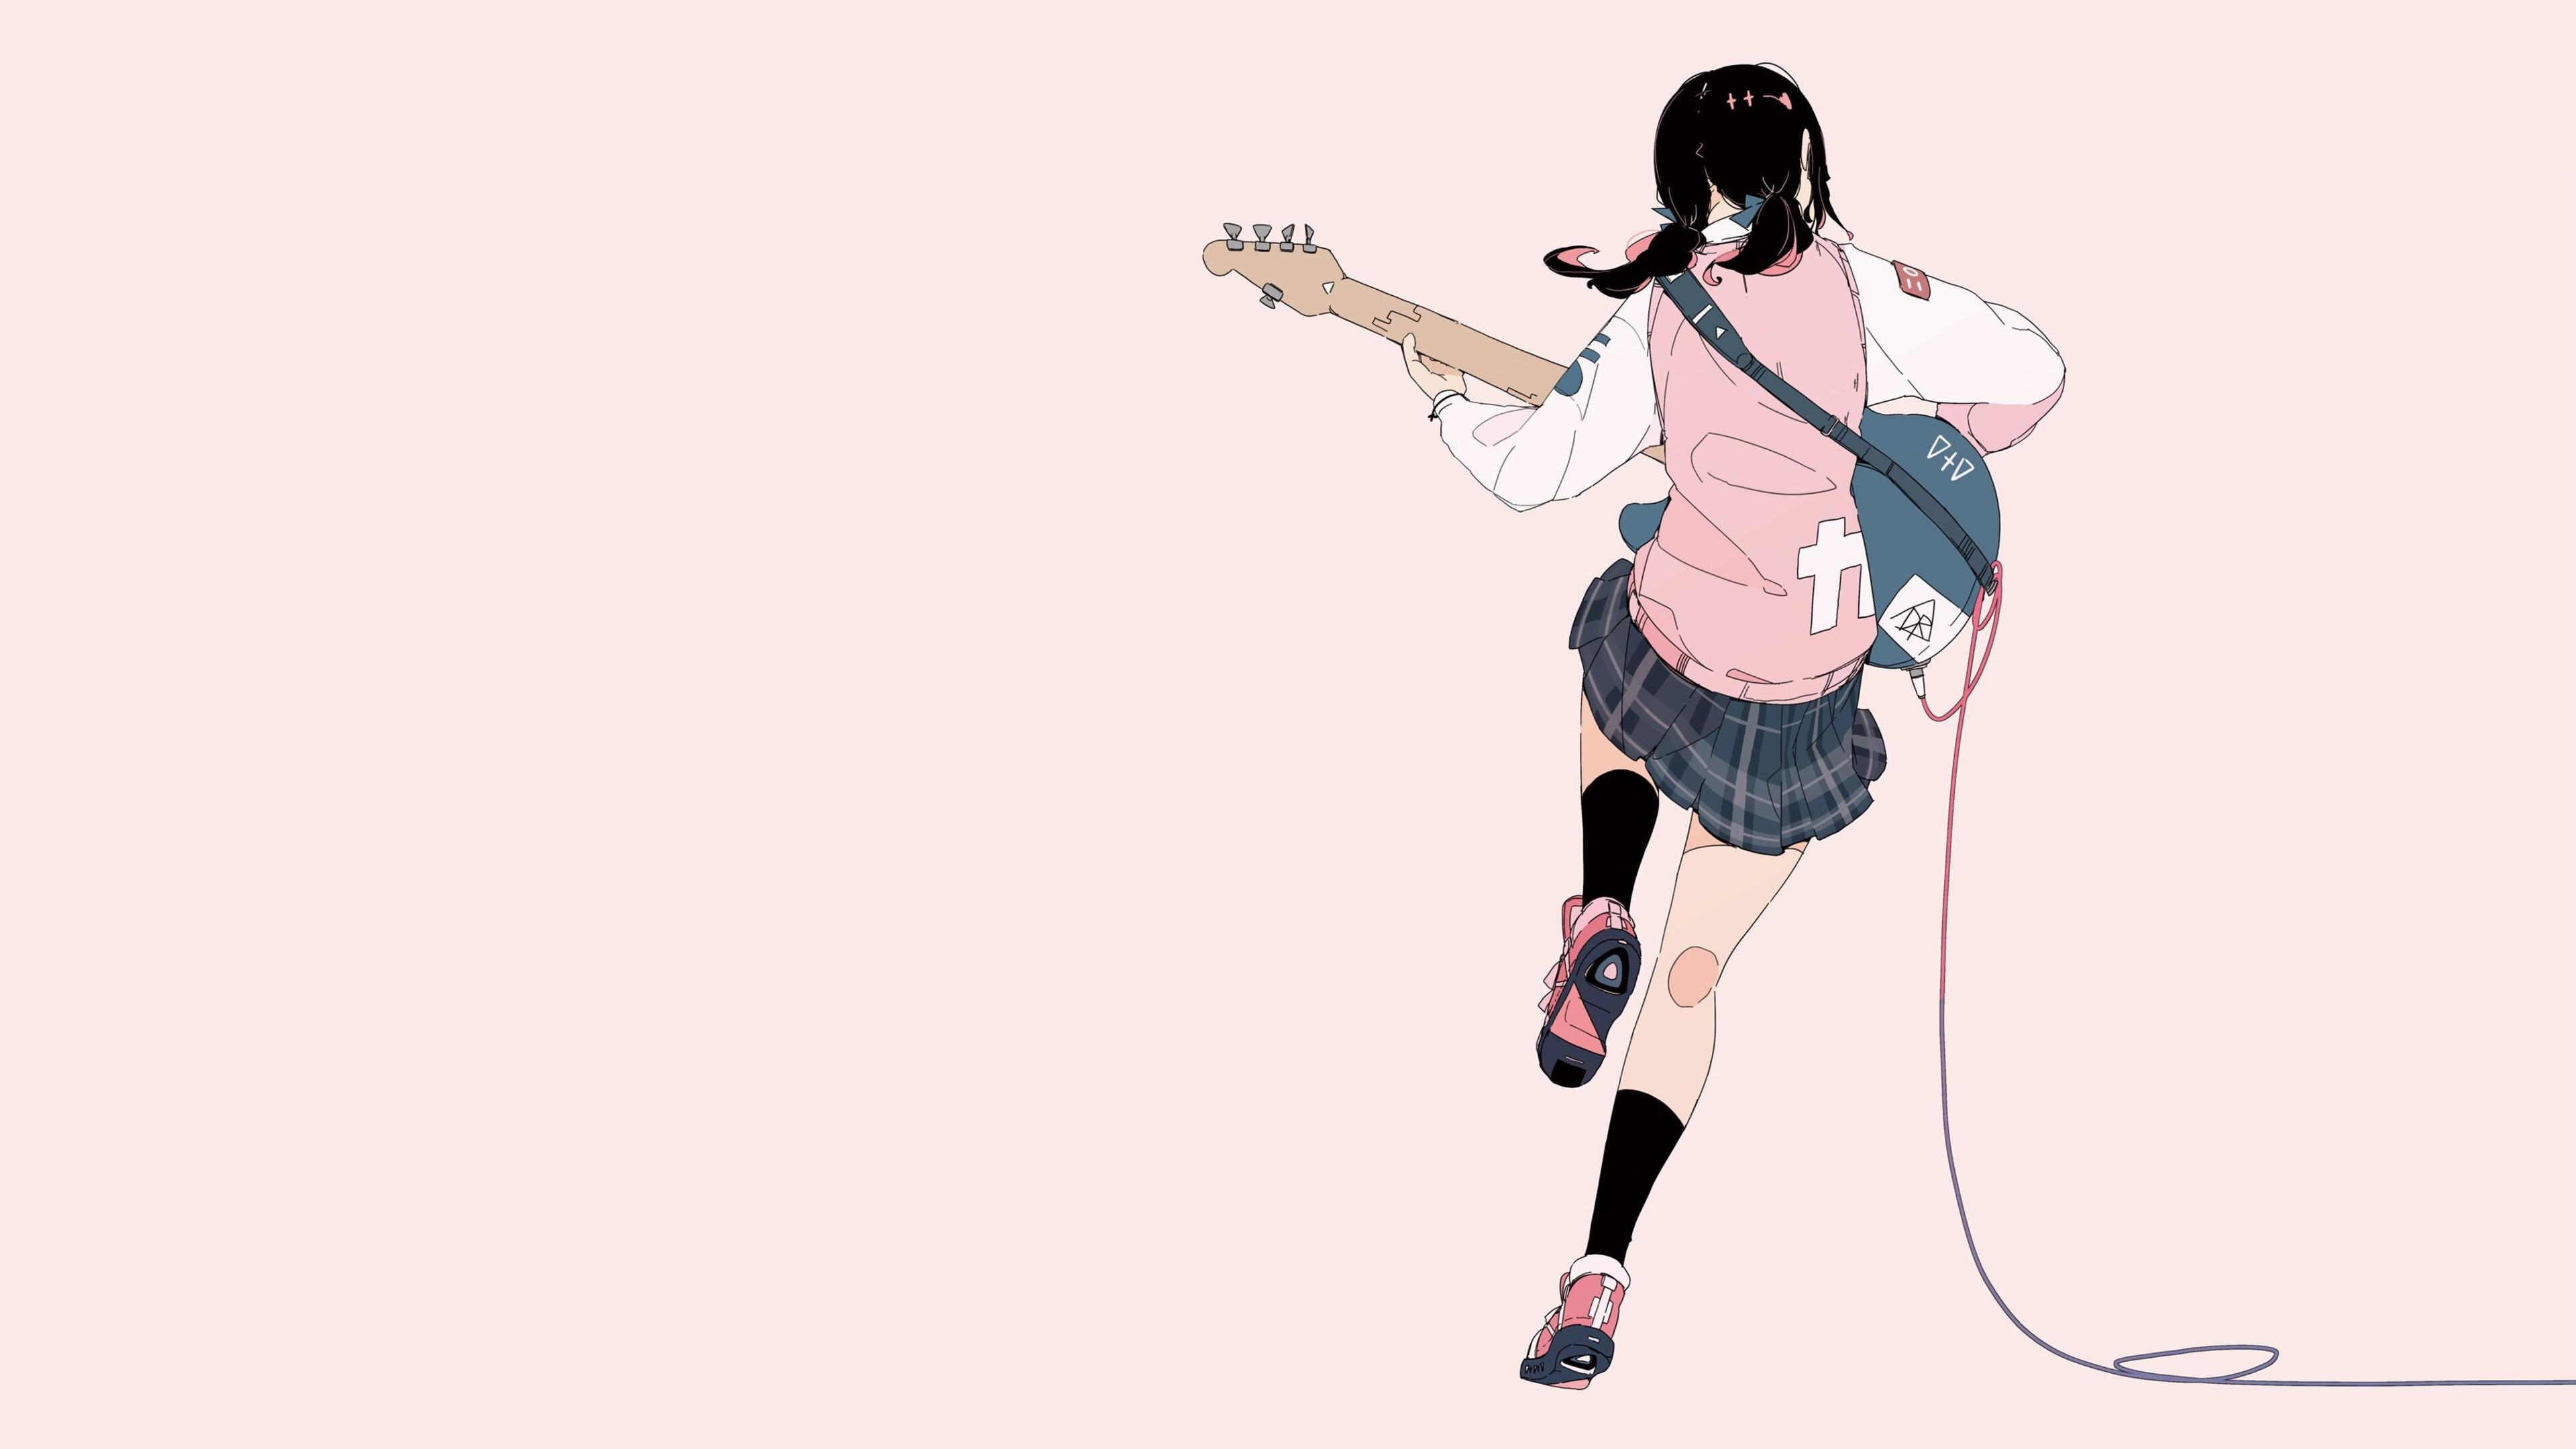 Anime 3840x2160 daisukerichard anime girls original characters minimalism guitar musical instrument simple background